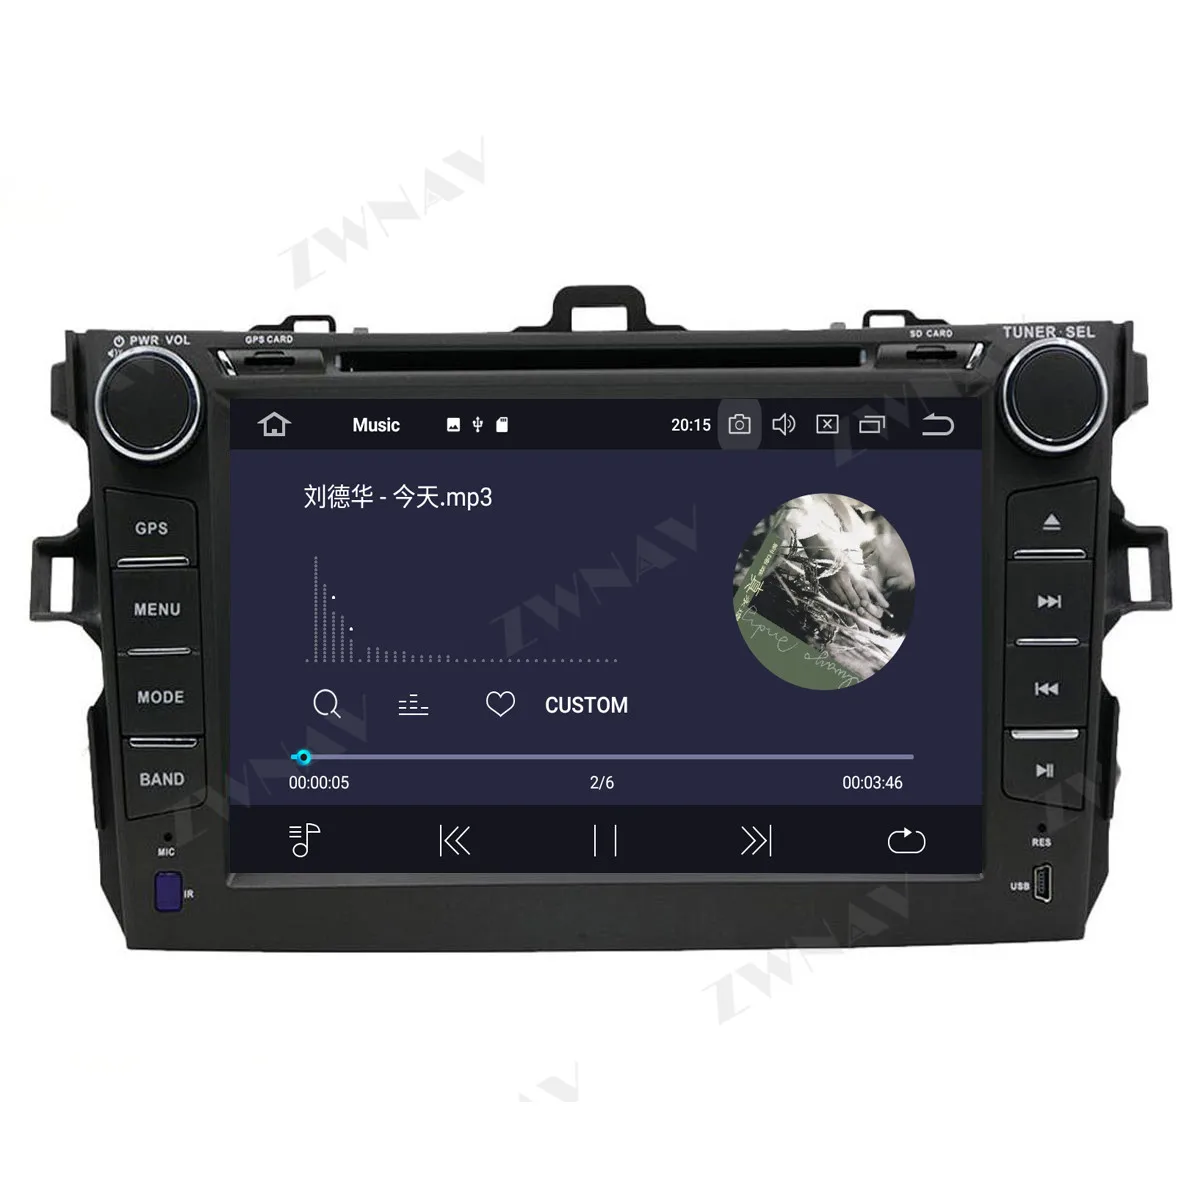 PX6 4+64GB Android 10.0 Car Multimedia Afspiller Til Toyota corolla 2007-2013 bil GPS Navi Radio navi stereo Touch screen head unit